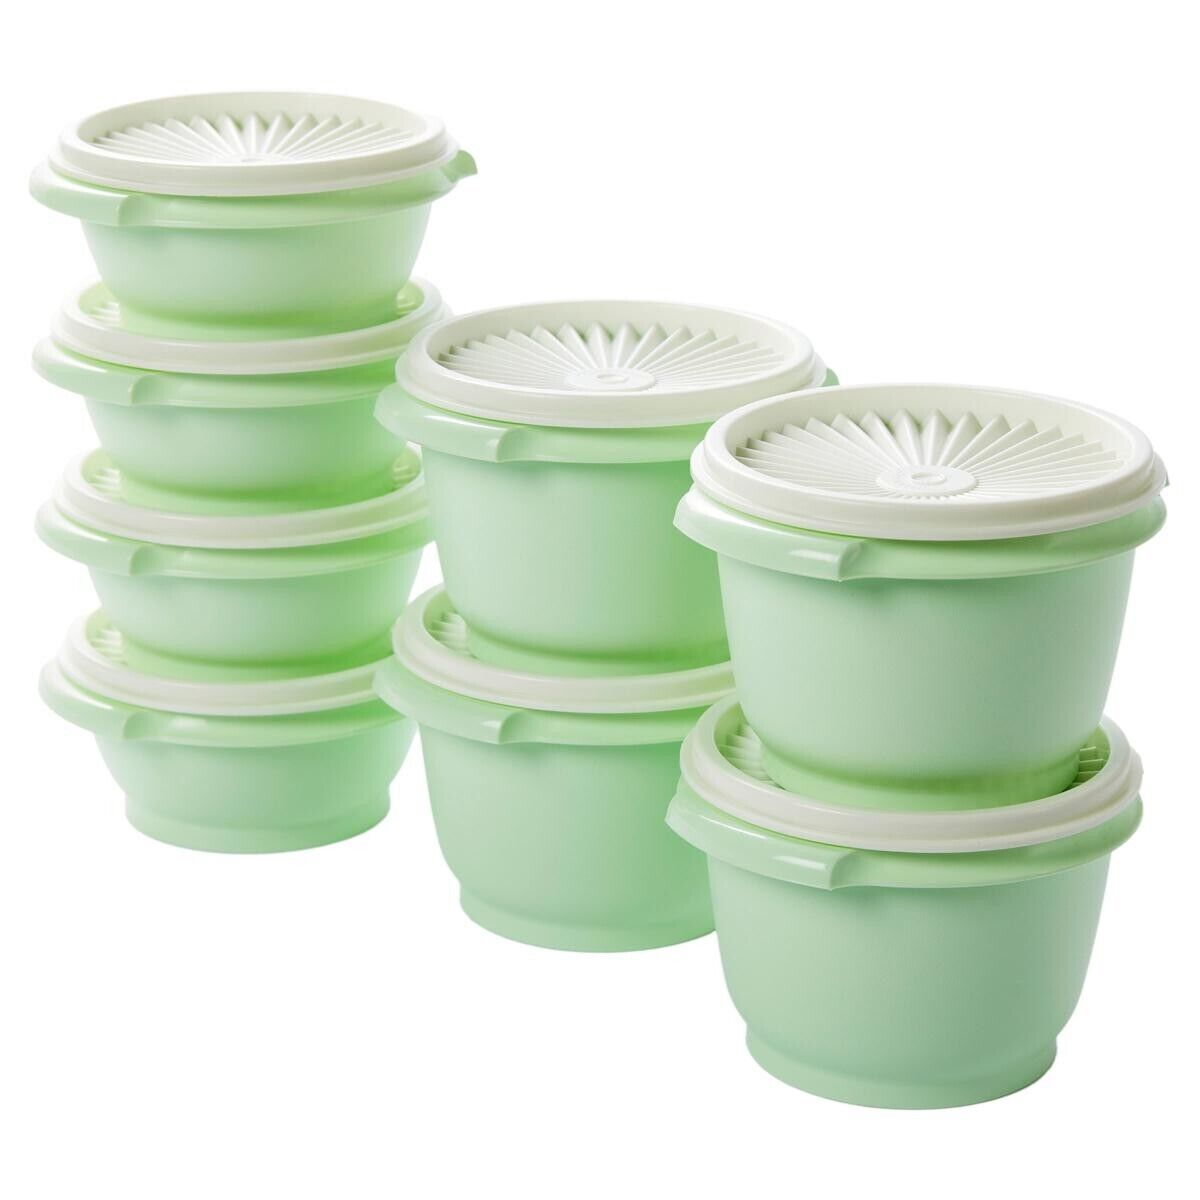 Tupperware 16-piece Heritage Round Mini Bowls Set Mint Green